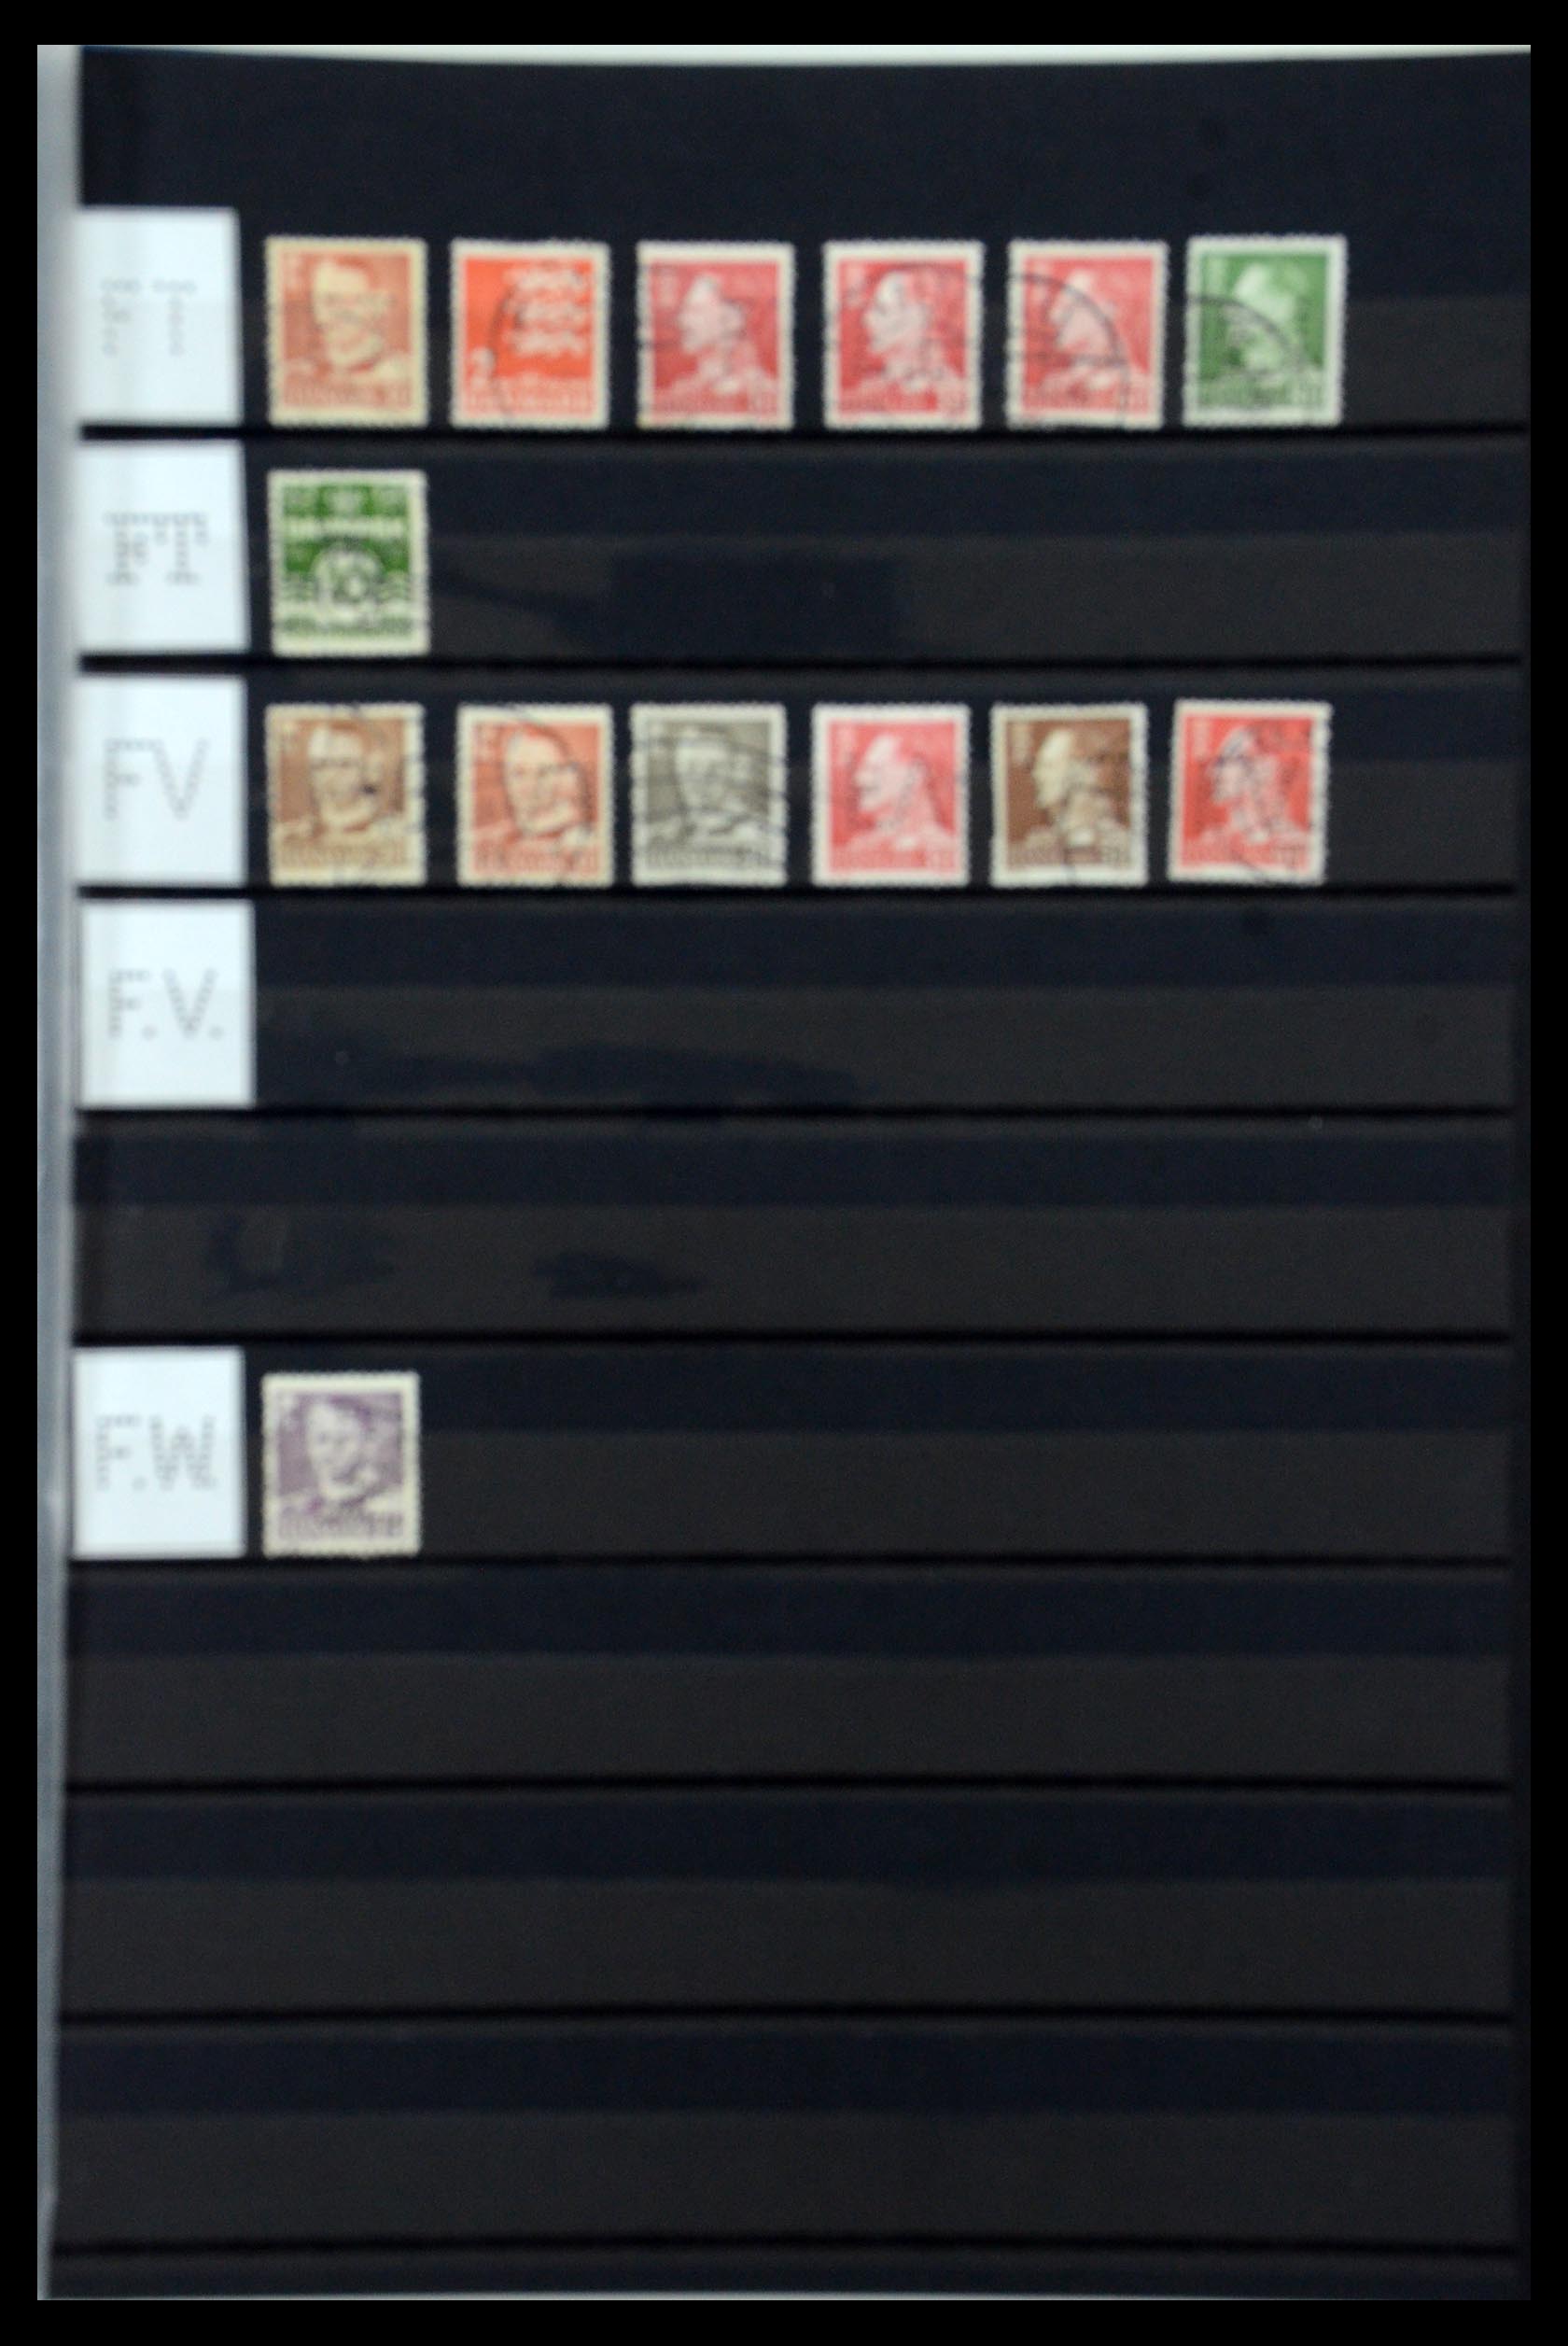 36396 056 - Stamp collection 36396 Denmark perfins.